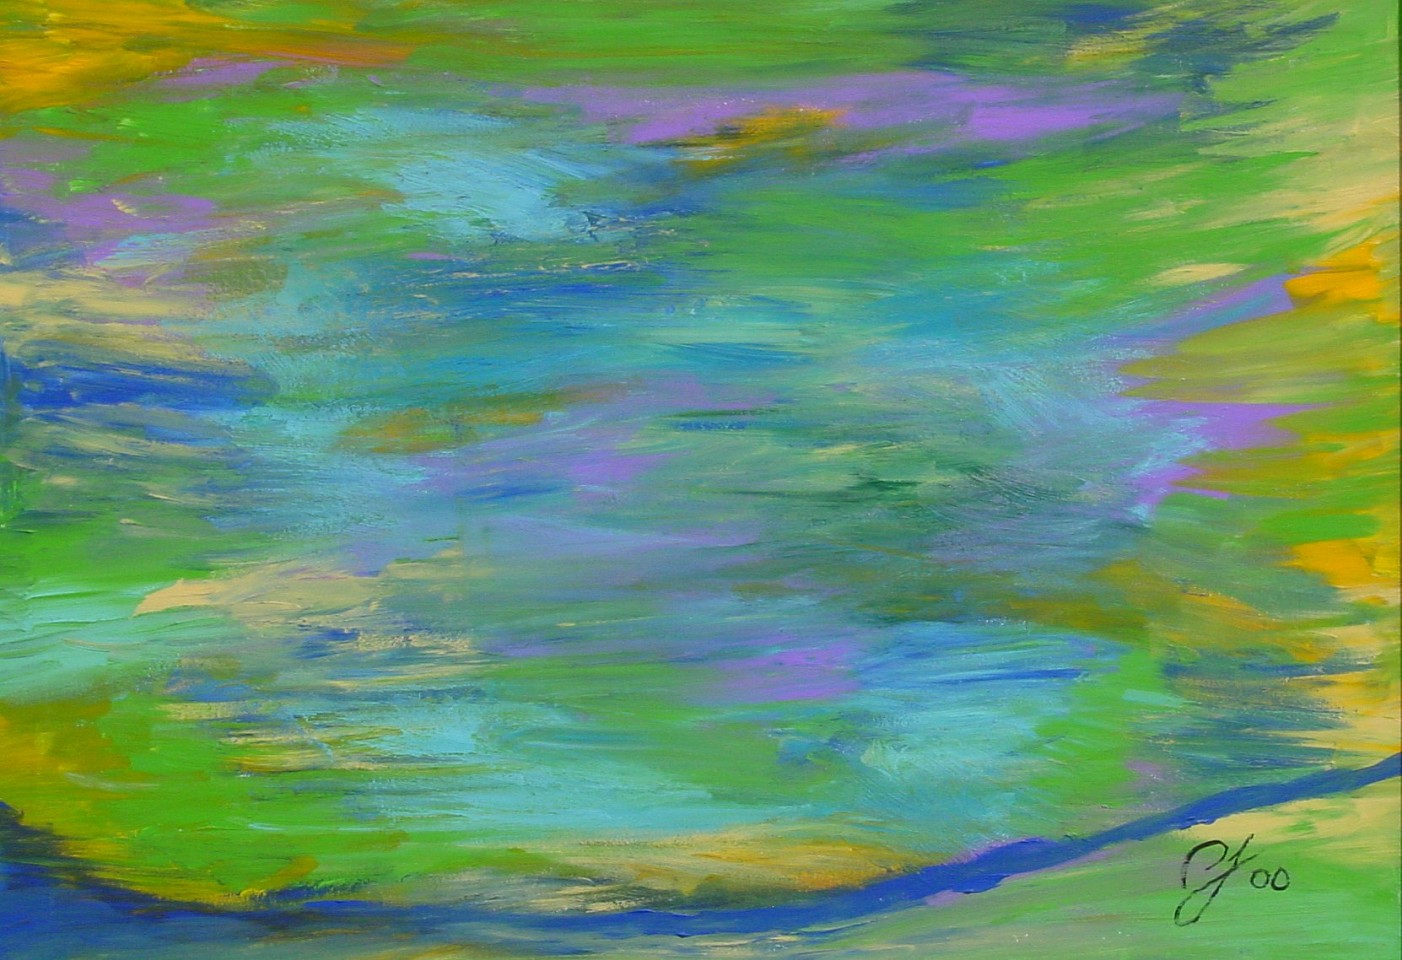 Diego Jacobson, Liquid Sky, 2000
Acrylic on Canvas, 30 x 40 in. (76.2 x 101.6 cm)
0033